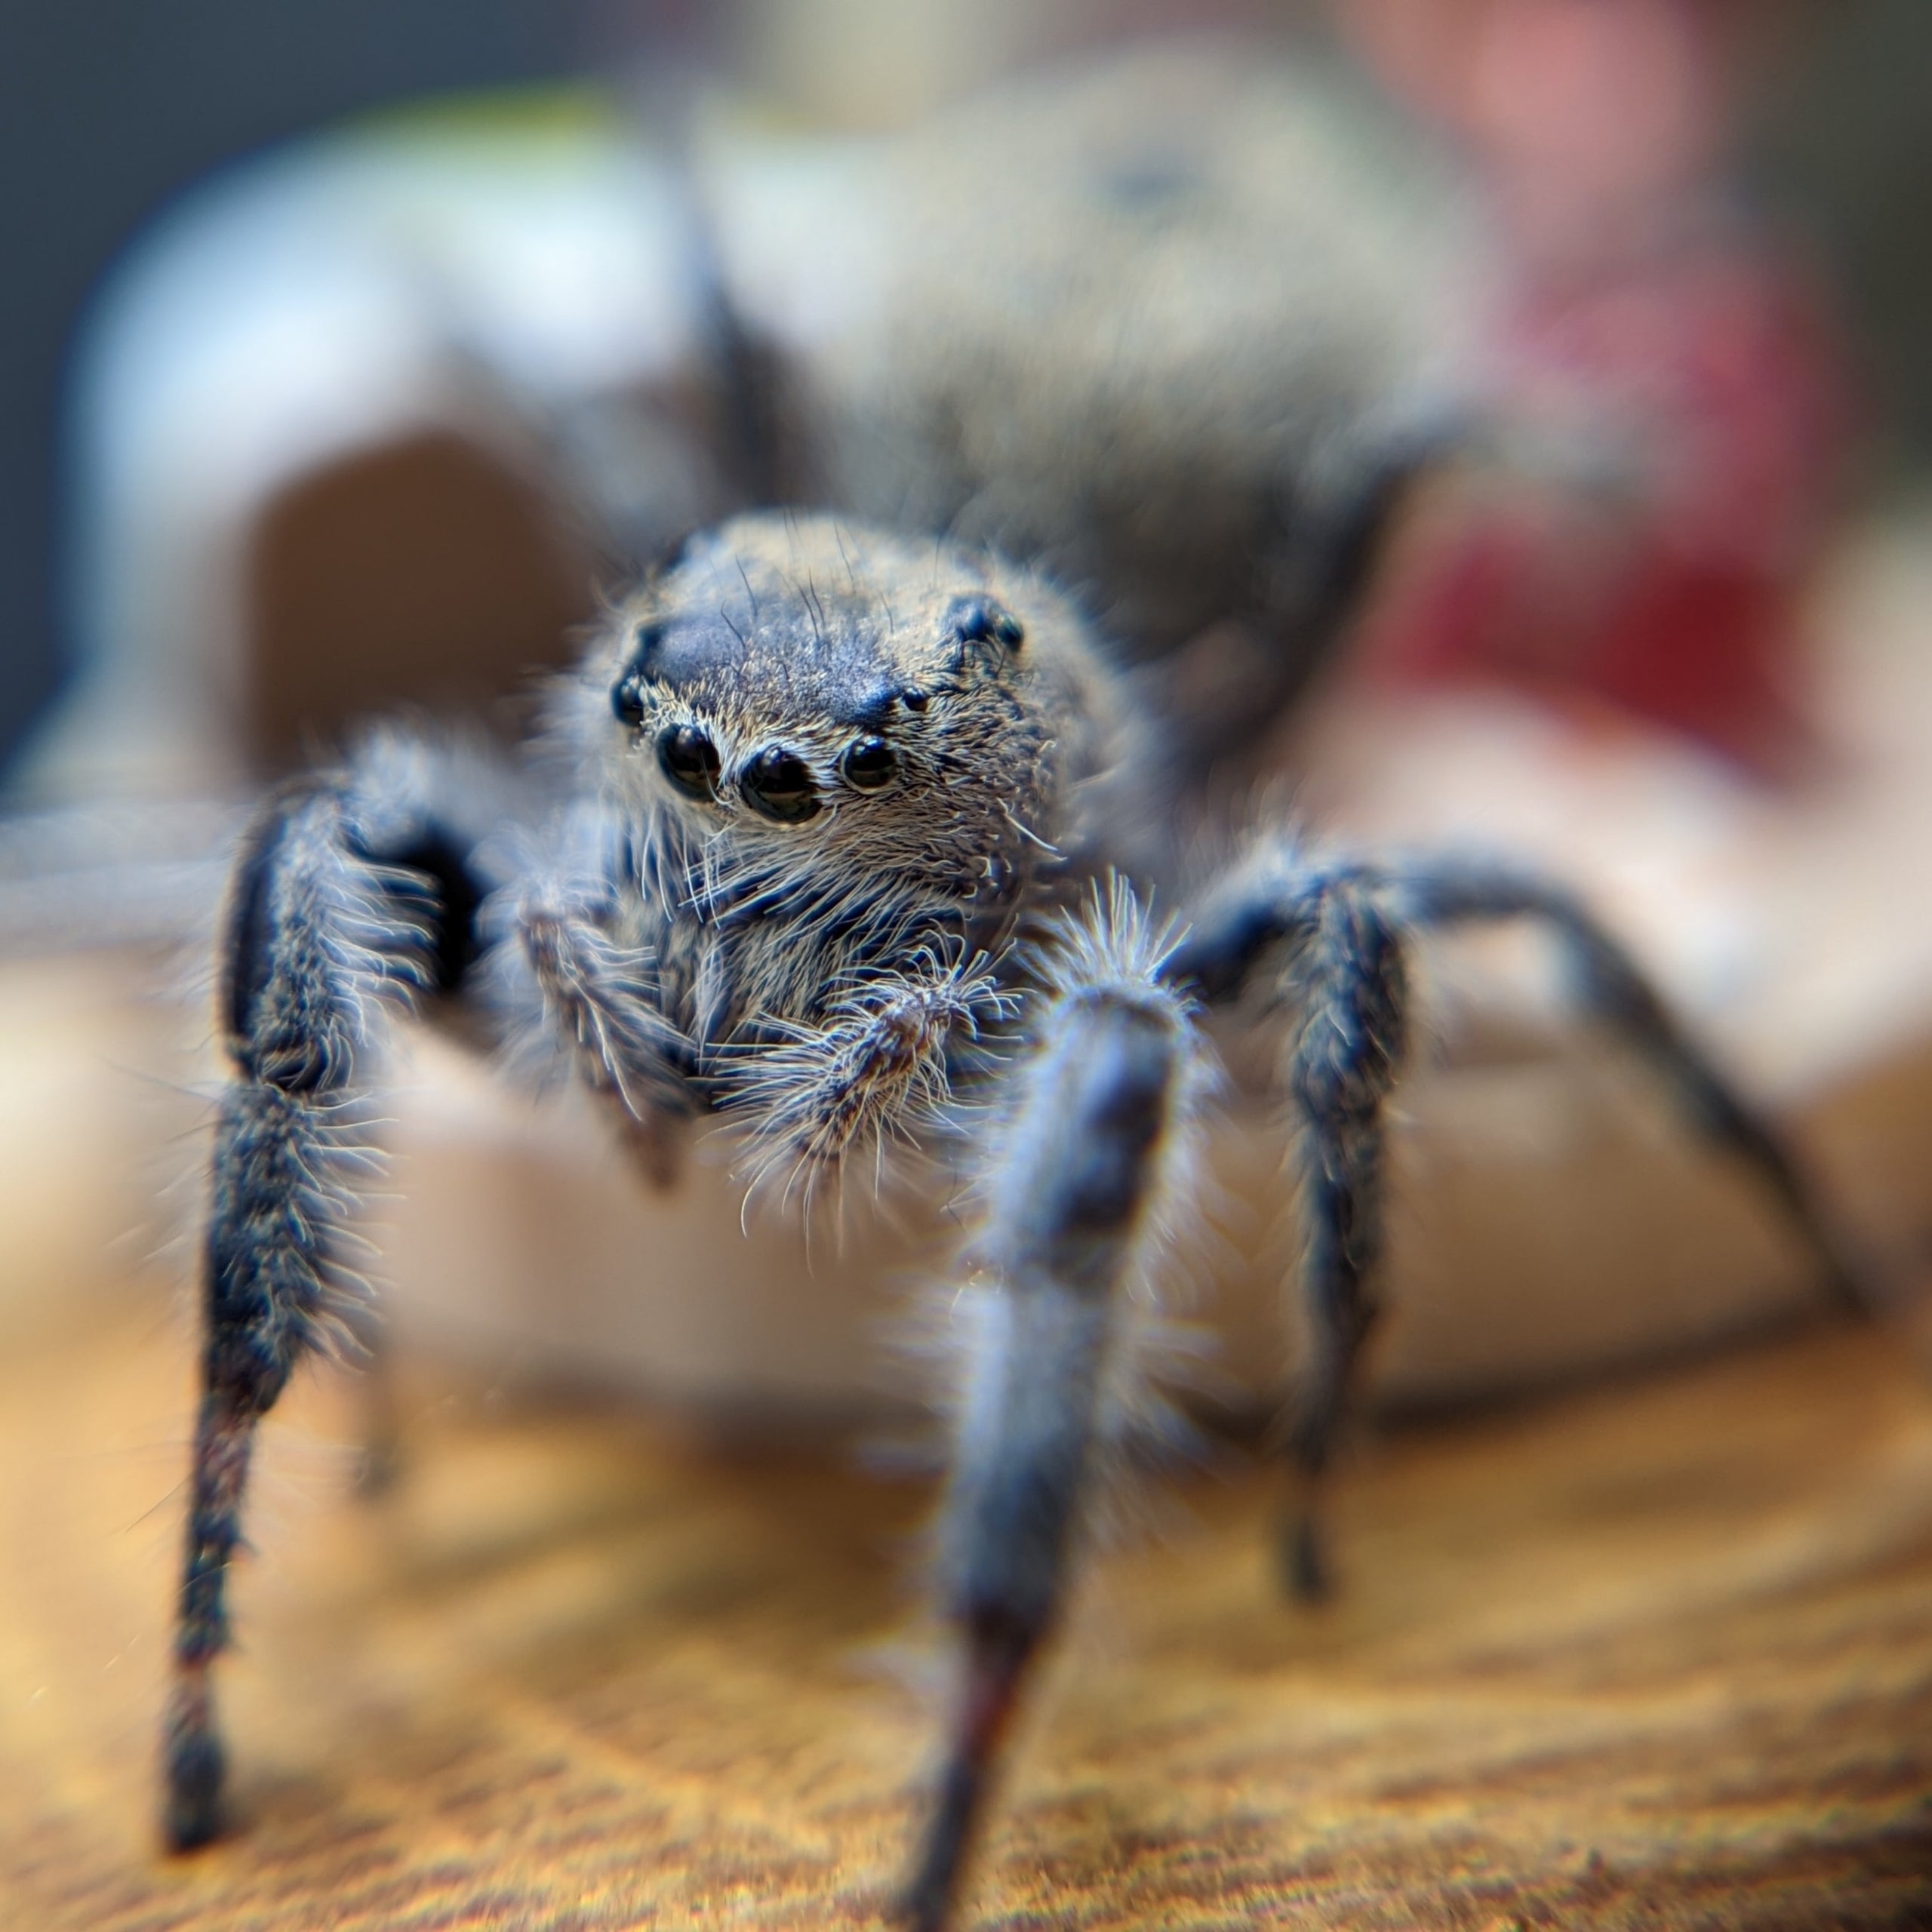 Fleecy jumping spider - SpiderSpotter